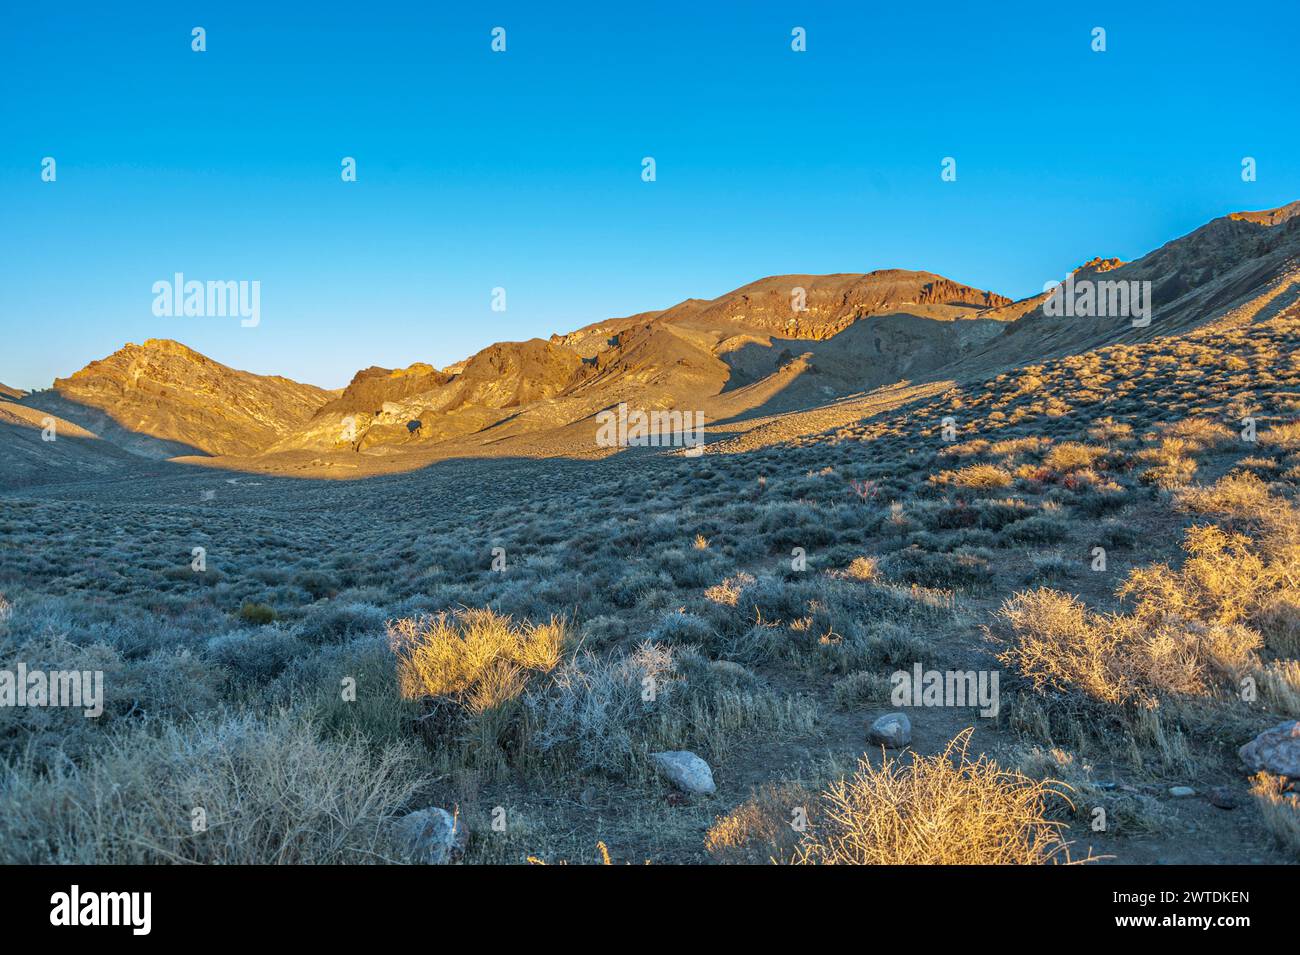 Nevada desert, USA Stock Photo